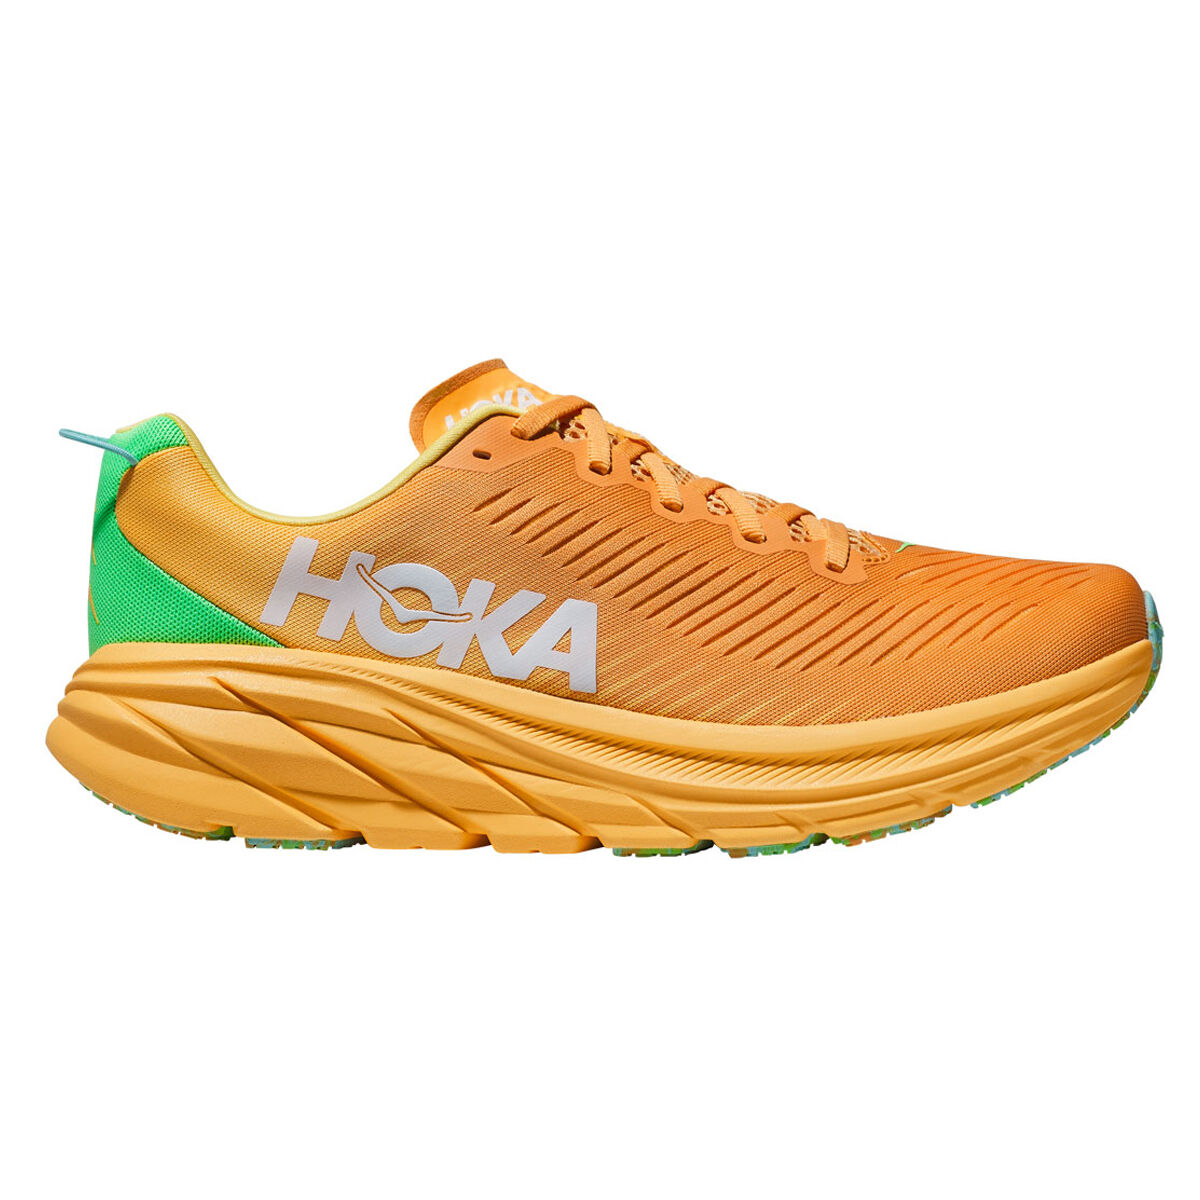 HOKA - Running Shoes & Performance Footwear - rebel